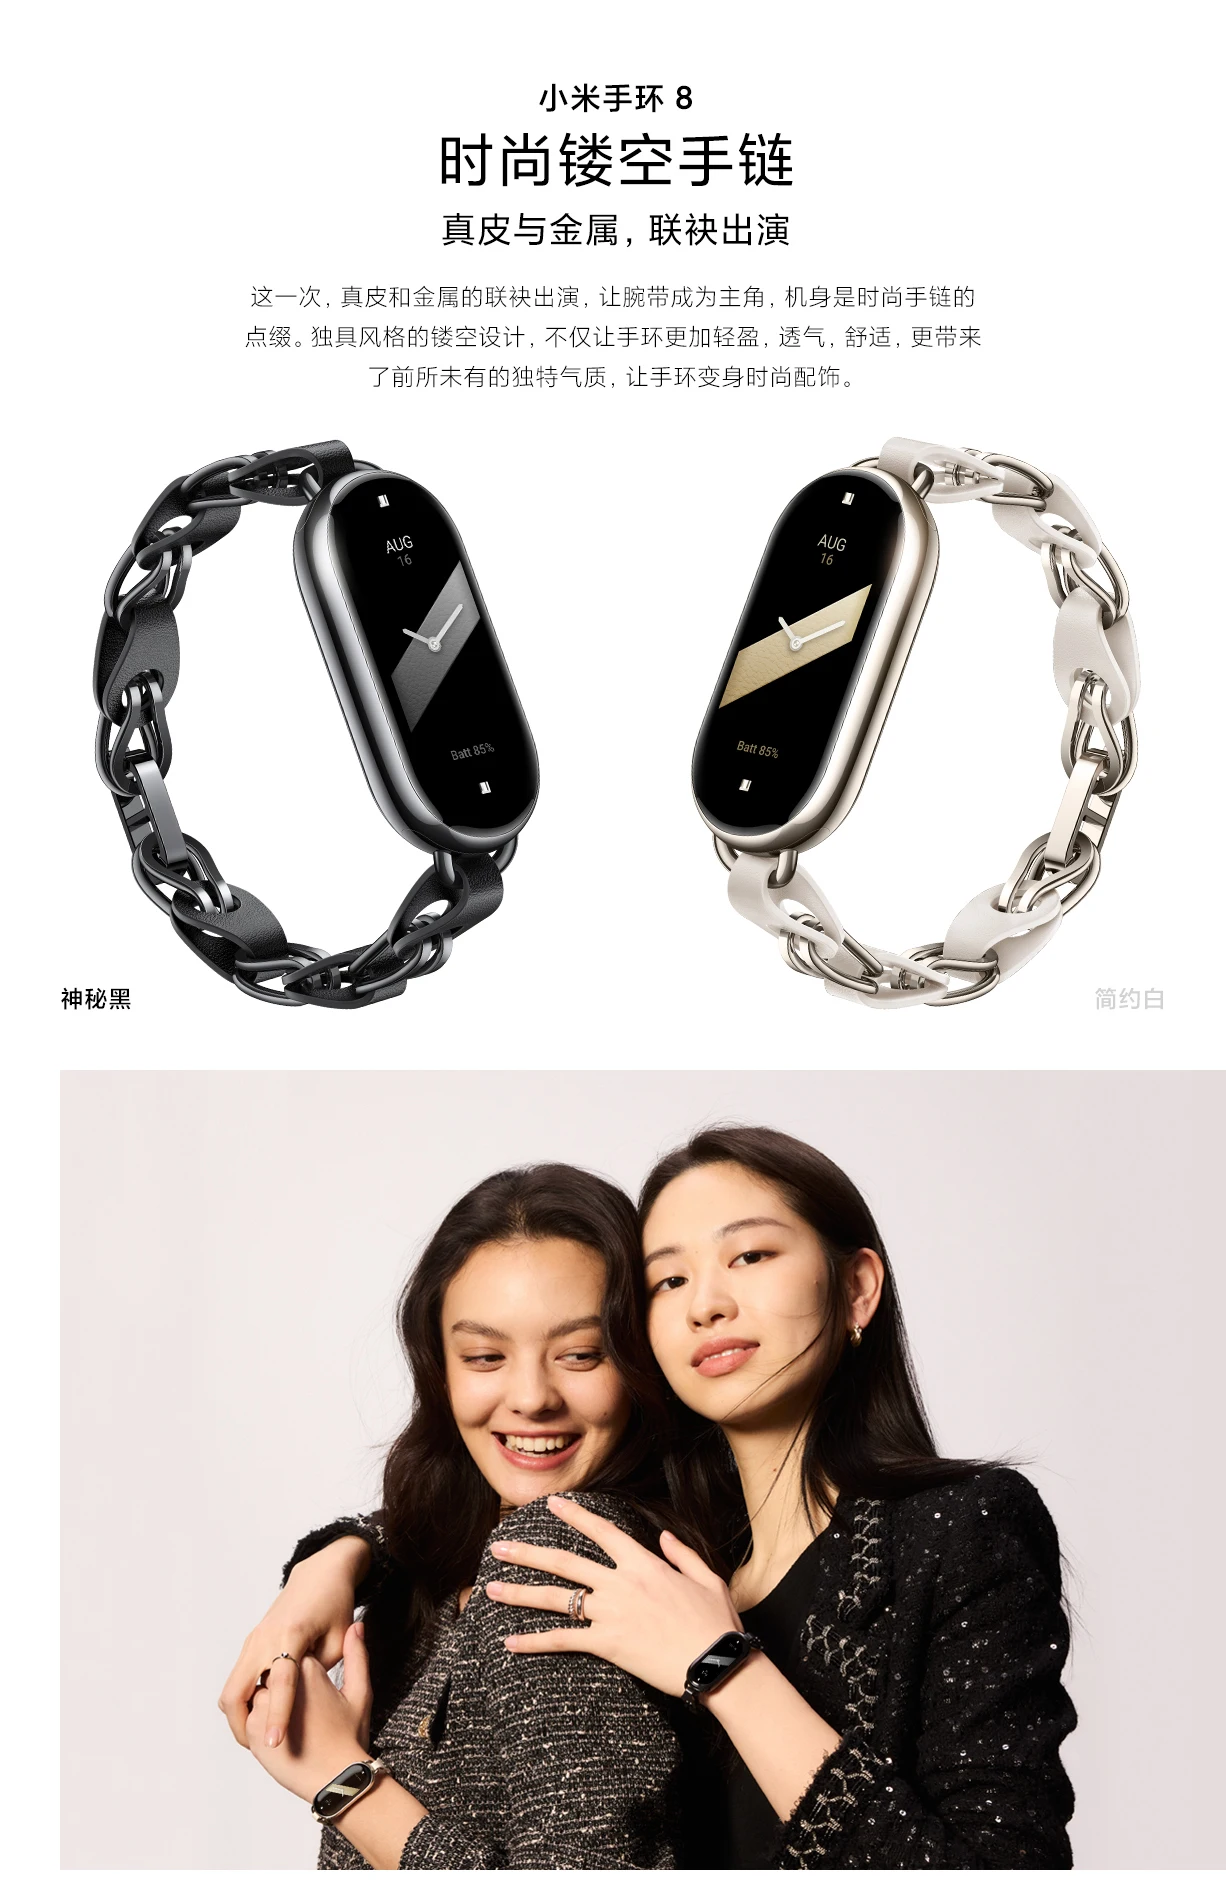 Original Xiaomi Mi Band 8 Strap TPU Woven Leather Chain Wristband Pendant  Sport Pod Replaceable Strap For Smart Band 8 Accessory - AliExpress